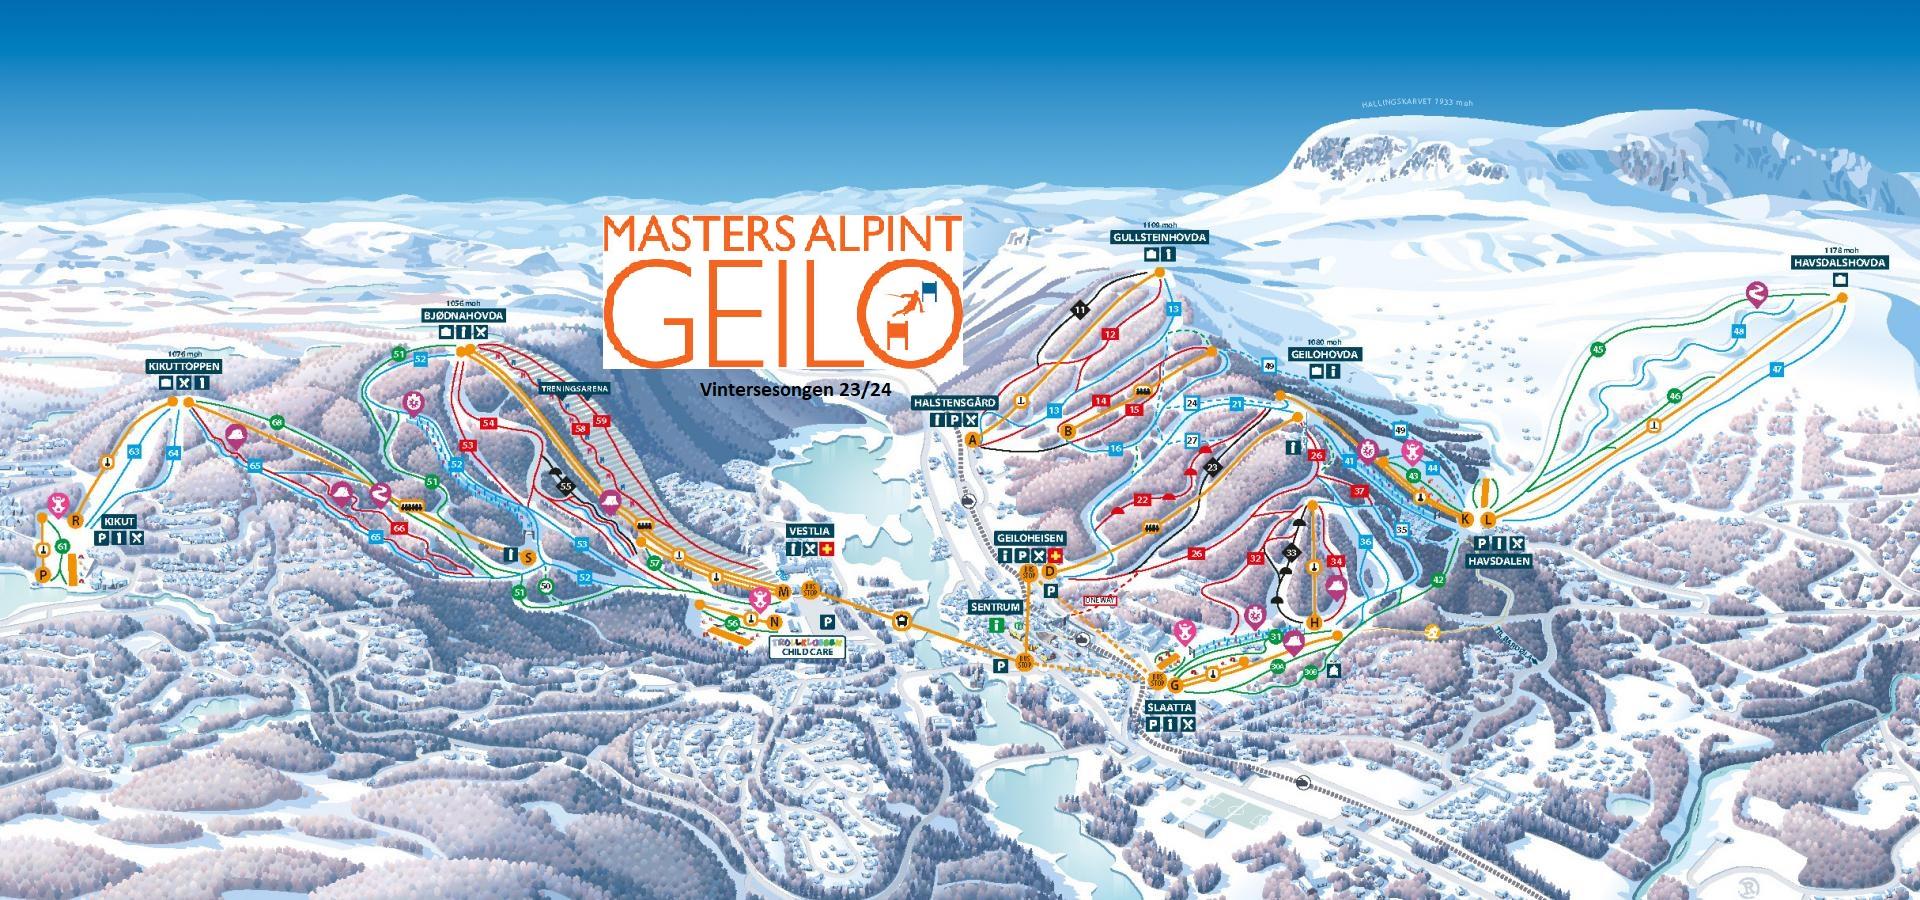 Masters alpint alpinkart Geilo